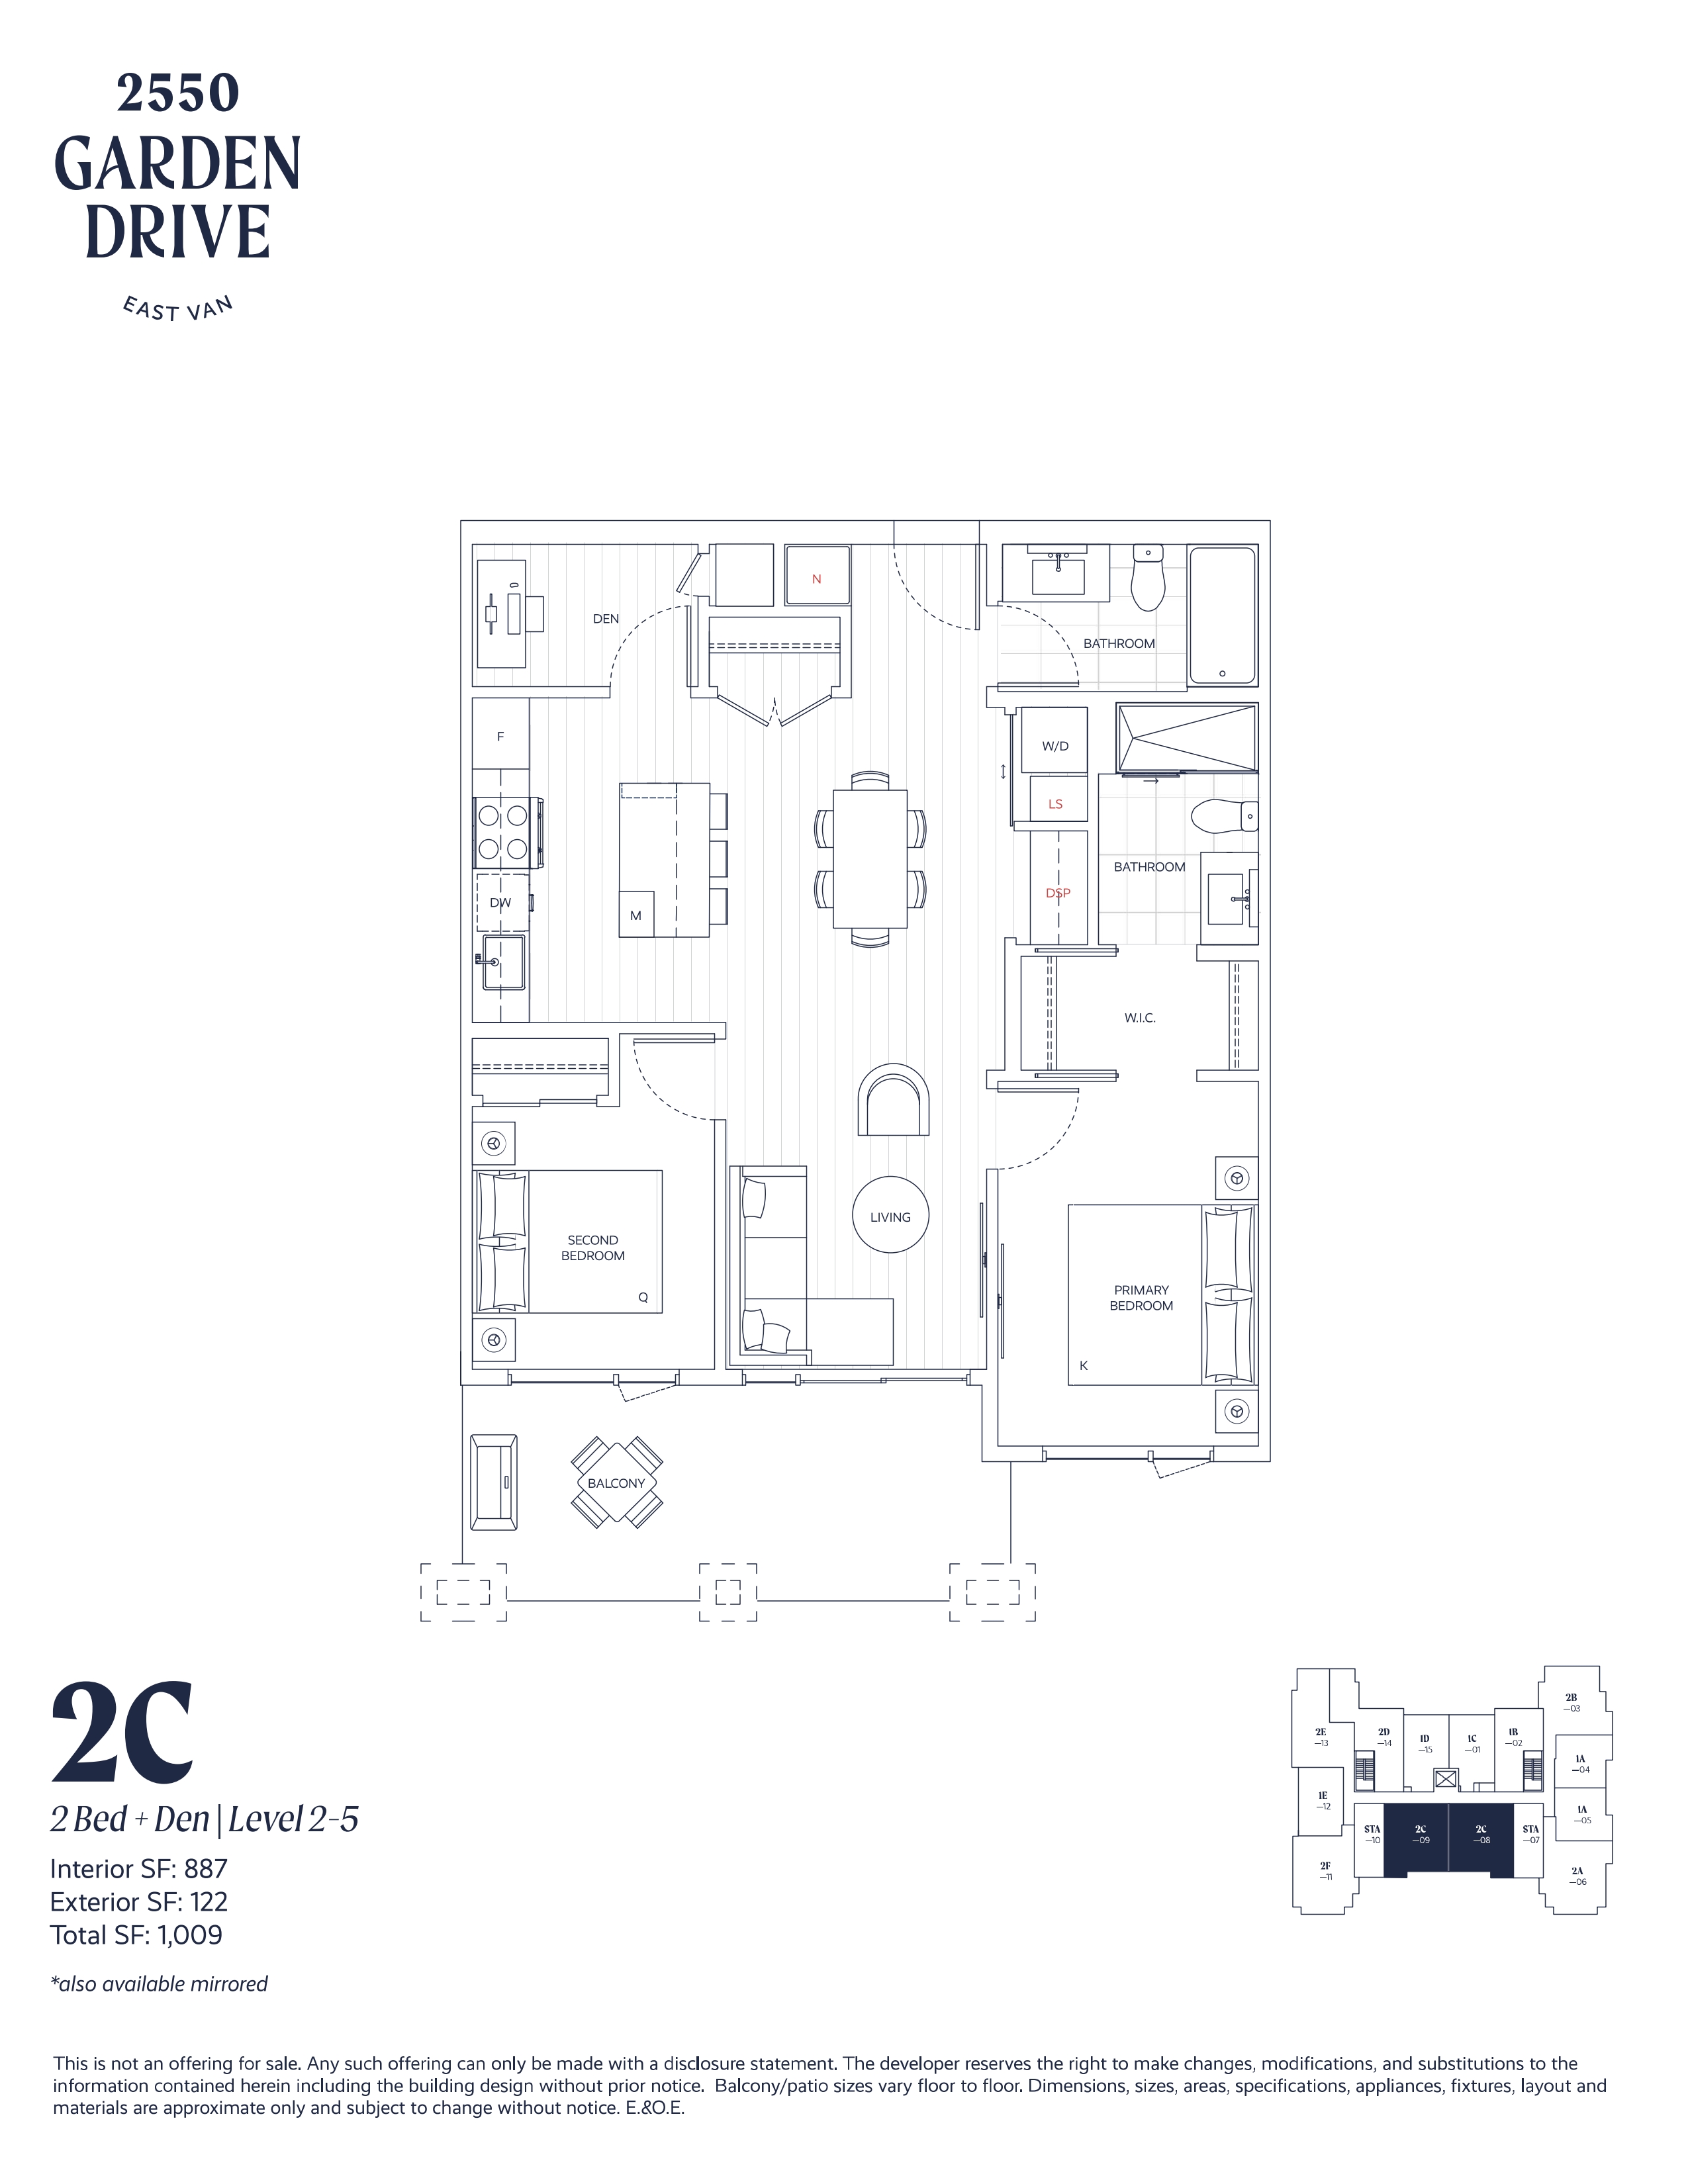 2C Floor Plan of 2550 Garden Drive Condos with undefined beds